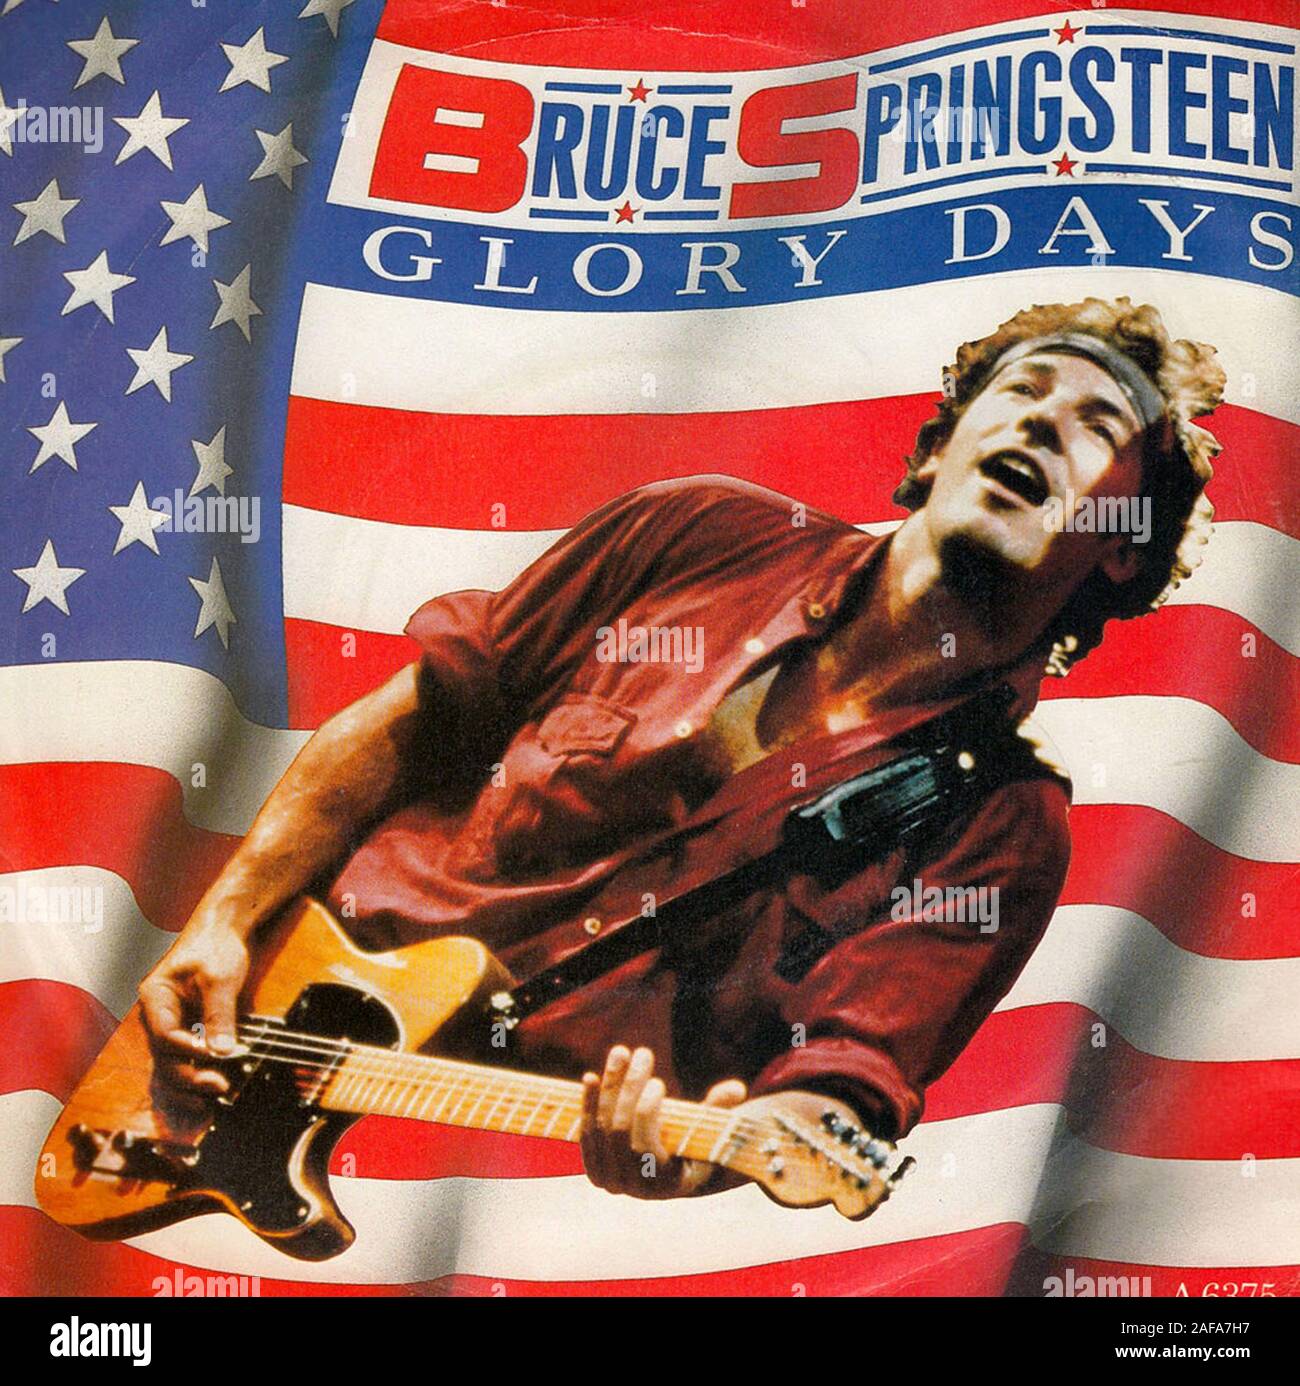 Bruce Springsteen - Glory Days - Vintage Vinyl Platten abdecken  Stockfotografie - Alamy